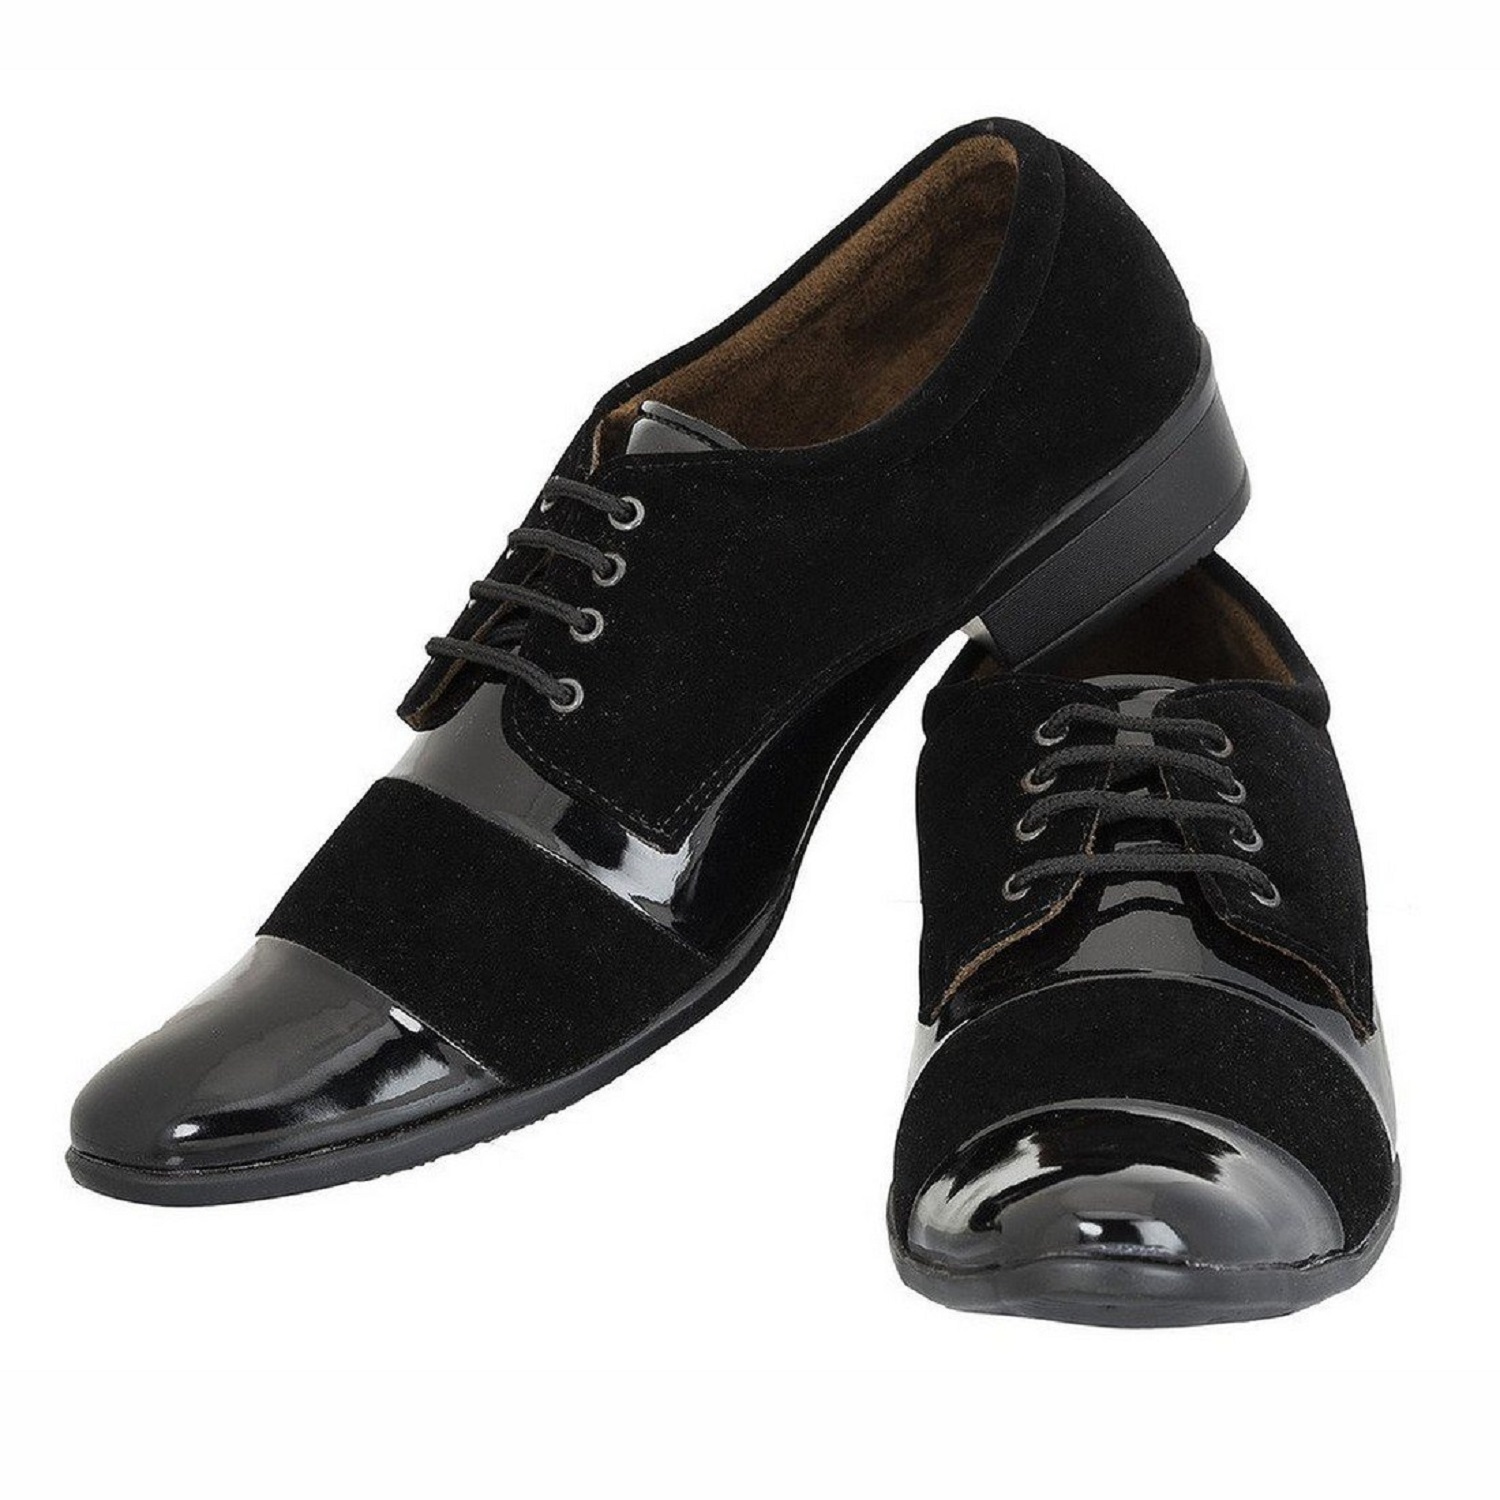 Buy Semana Men's Patent Leather Party Wear Shoes Black Online @ ₹699 ...